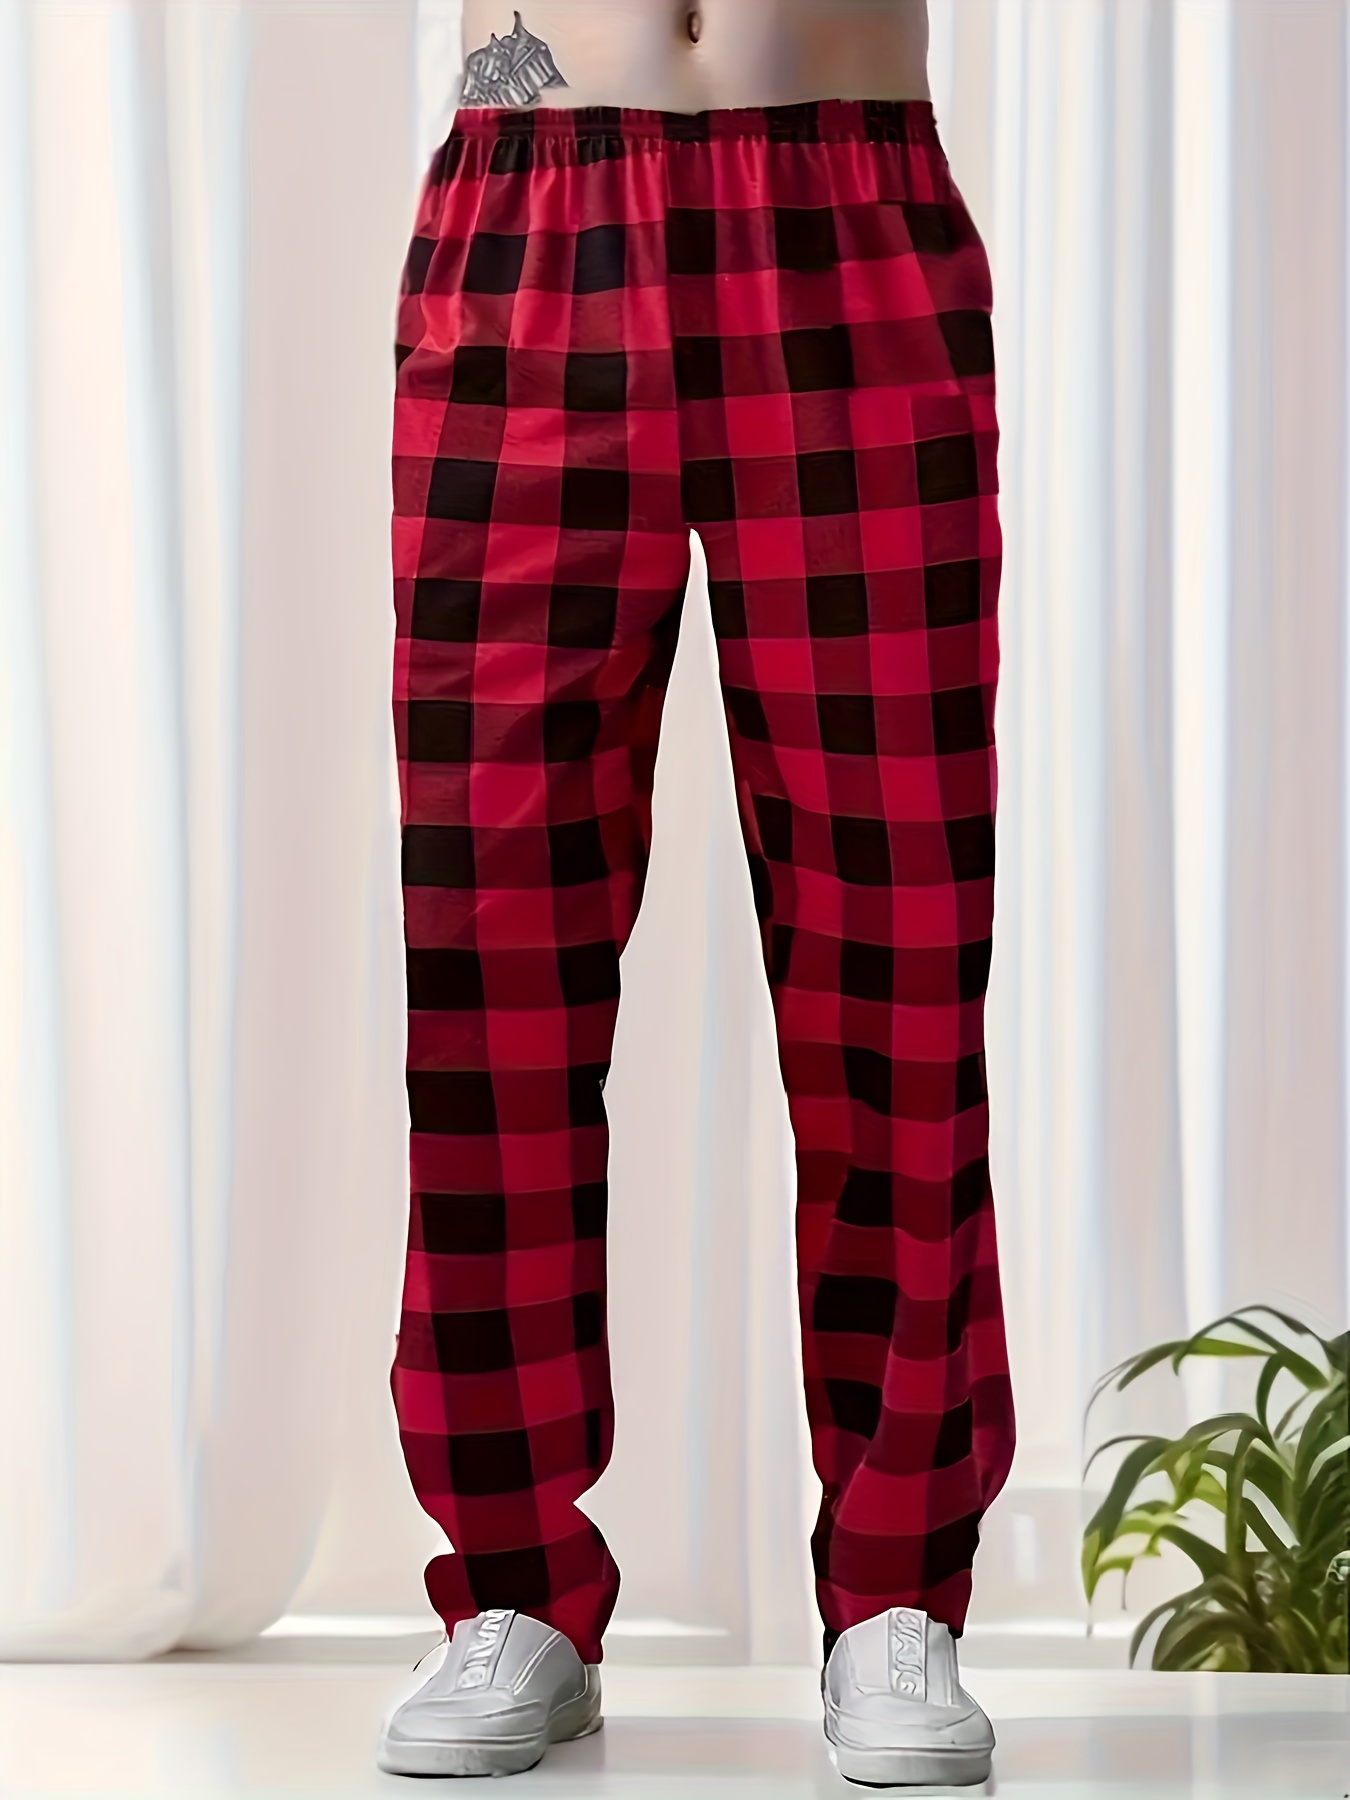 Women Lounge Pants Comfy Pajama Bottom with Pockets Stretch Classic Plaid  Sleepwear Drawstring Elastic Waist Pj Bottoms Pants,Soft Full Length